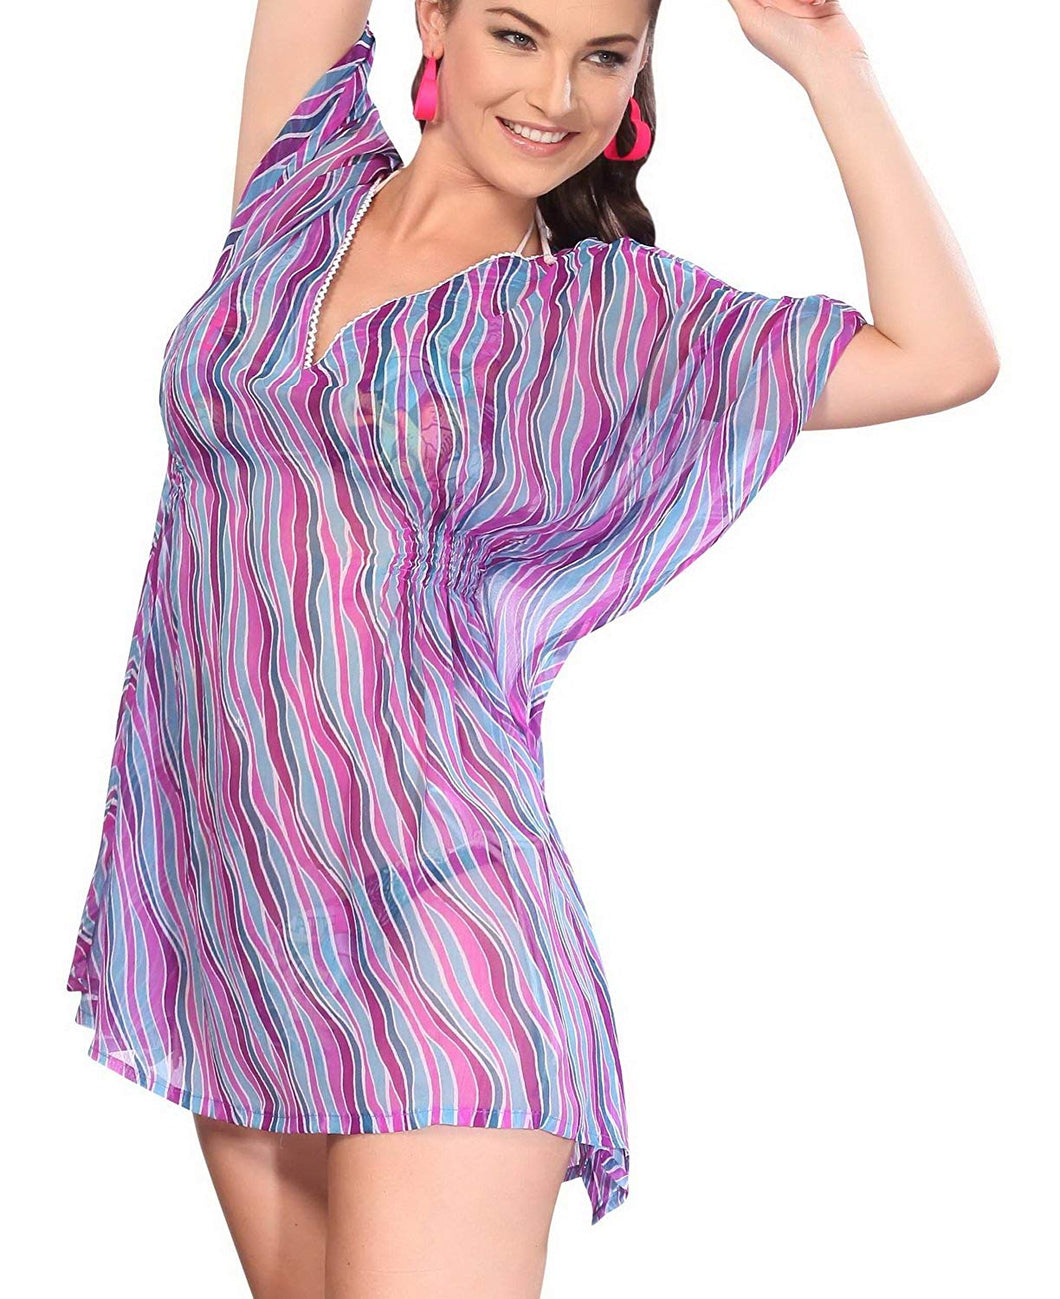 la-leela-chiffon-printed-loose-blouse-cover-up-osfm-8-14-m-l-purple_5253